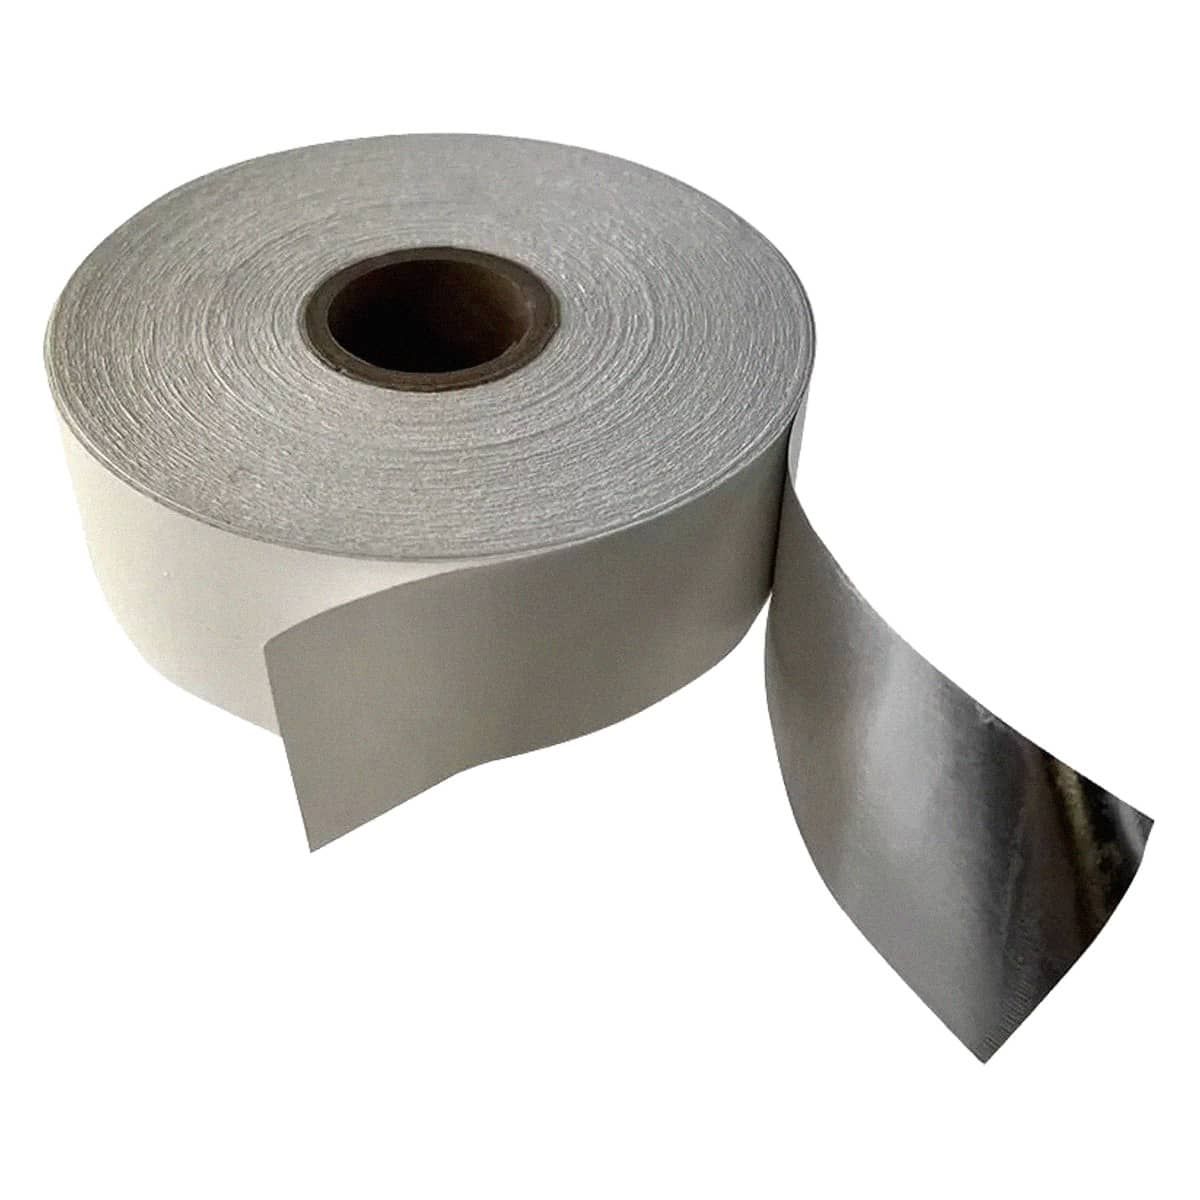 Lineco Self-Adhesive Gray Frame Sealing Tape